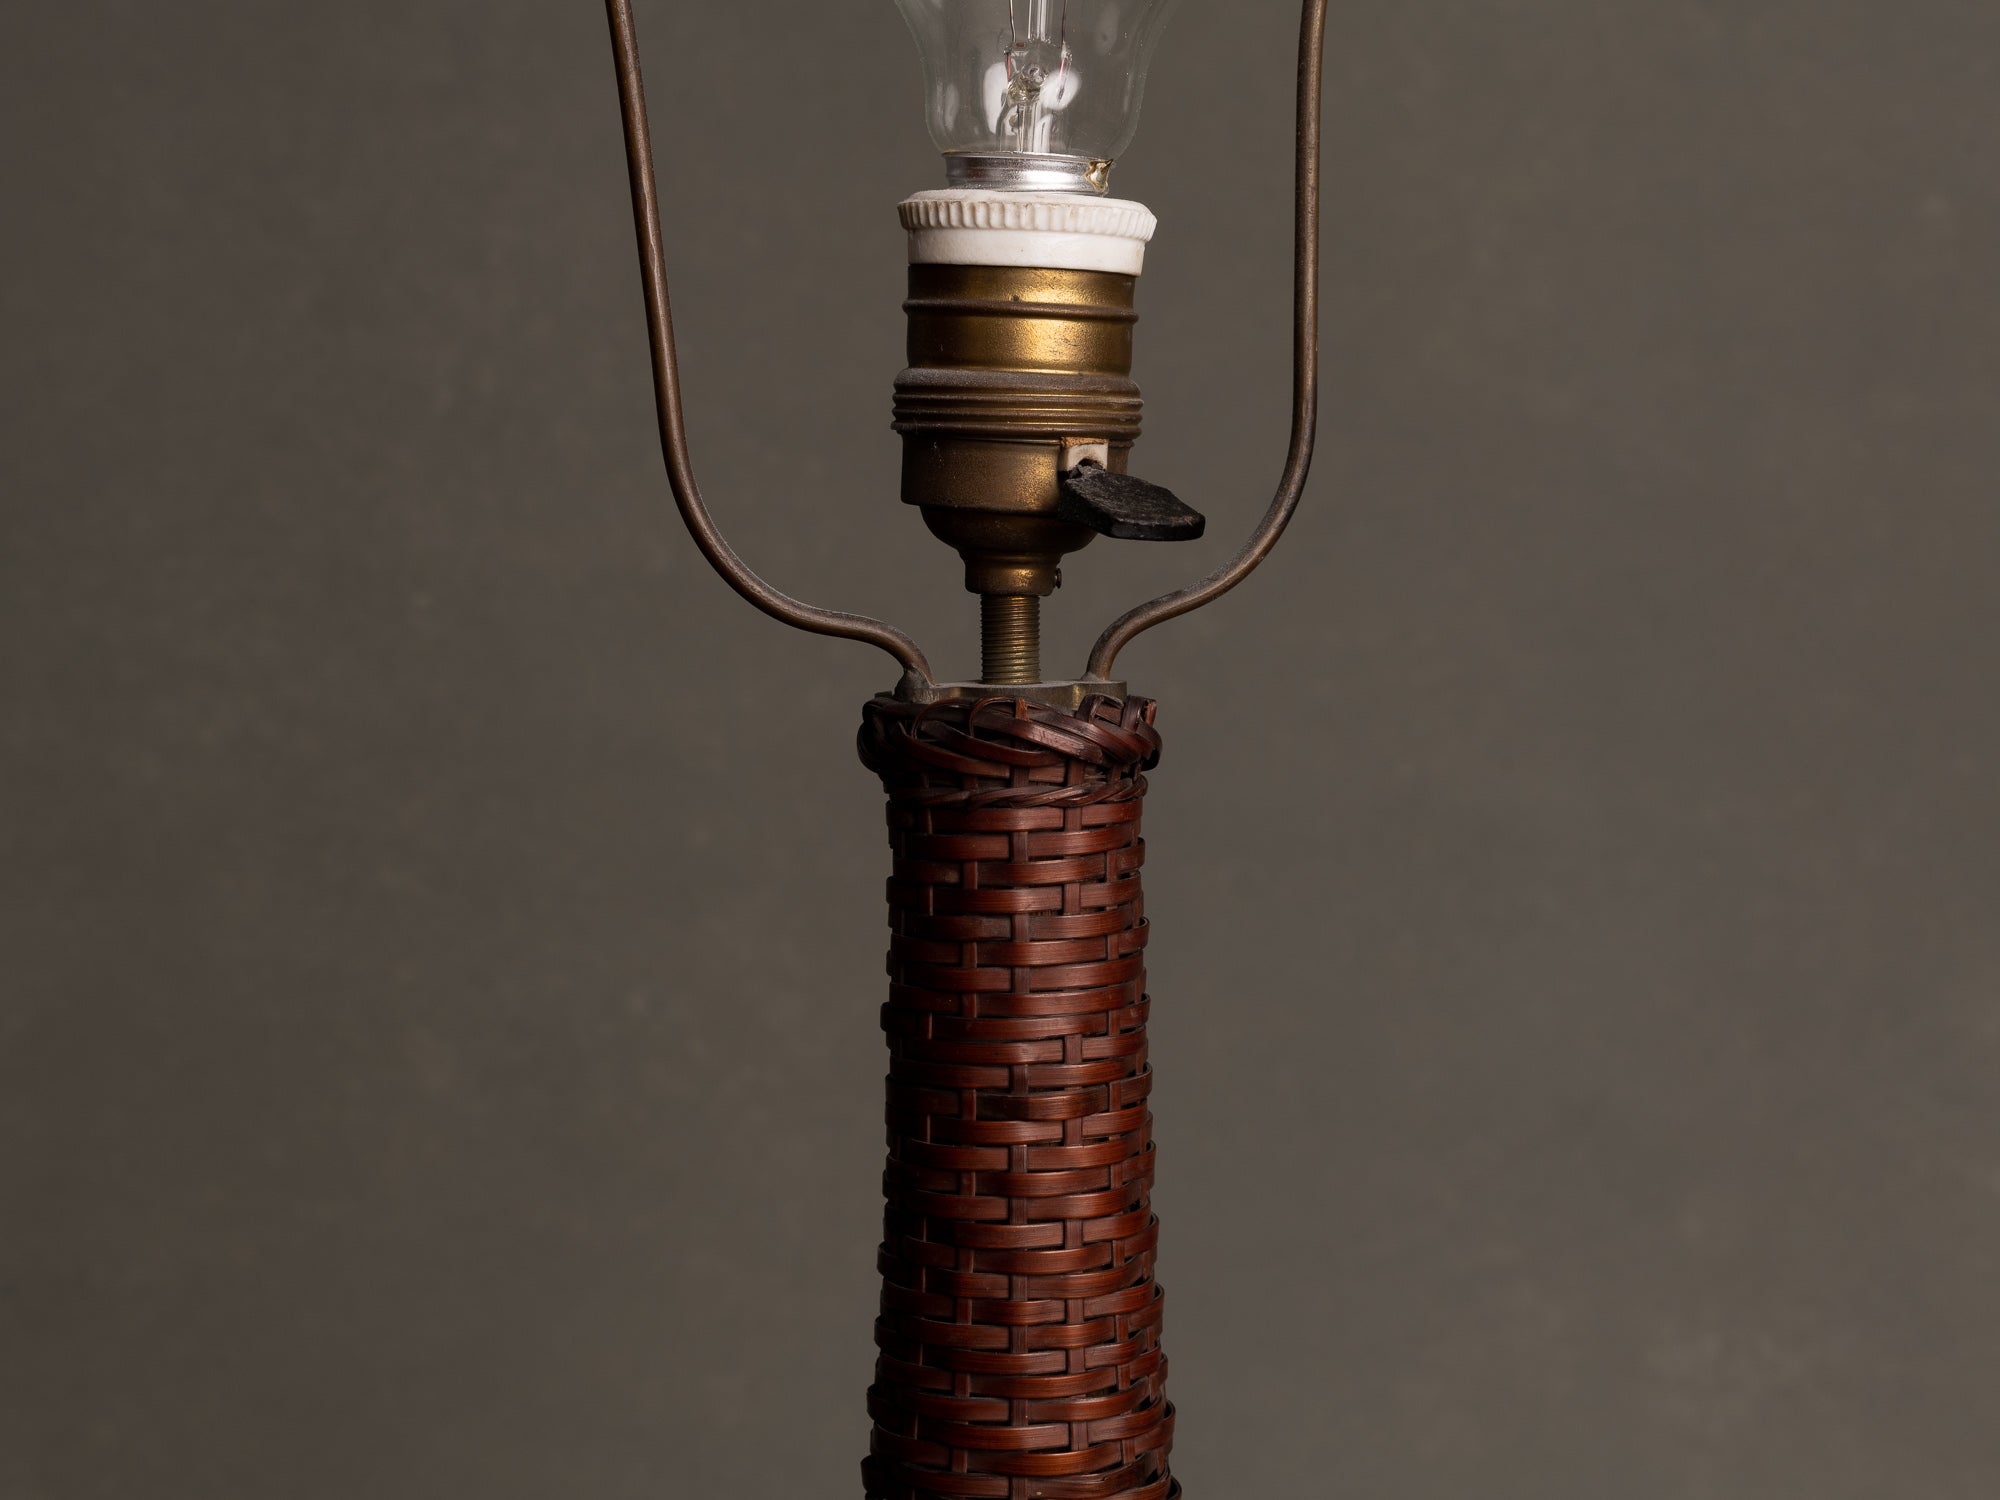 Rare lampe en vannerie de bambou nippone, Japon (fin Ère meiji / ère Taishō)..Rare lamp in Japanese bamboo basketry wickerwork, Japan (late Meiji era / Taishō era)